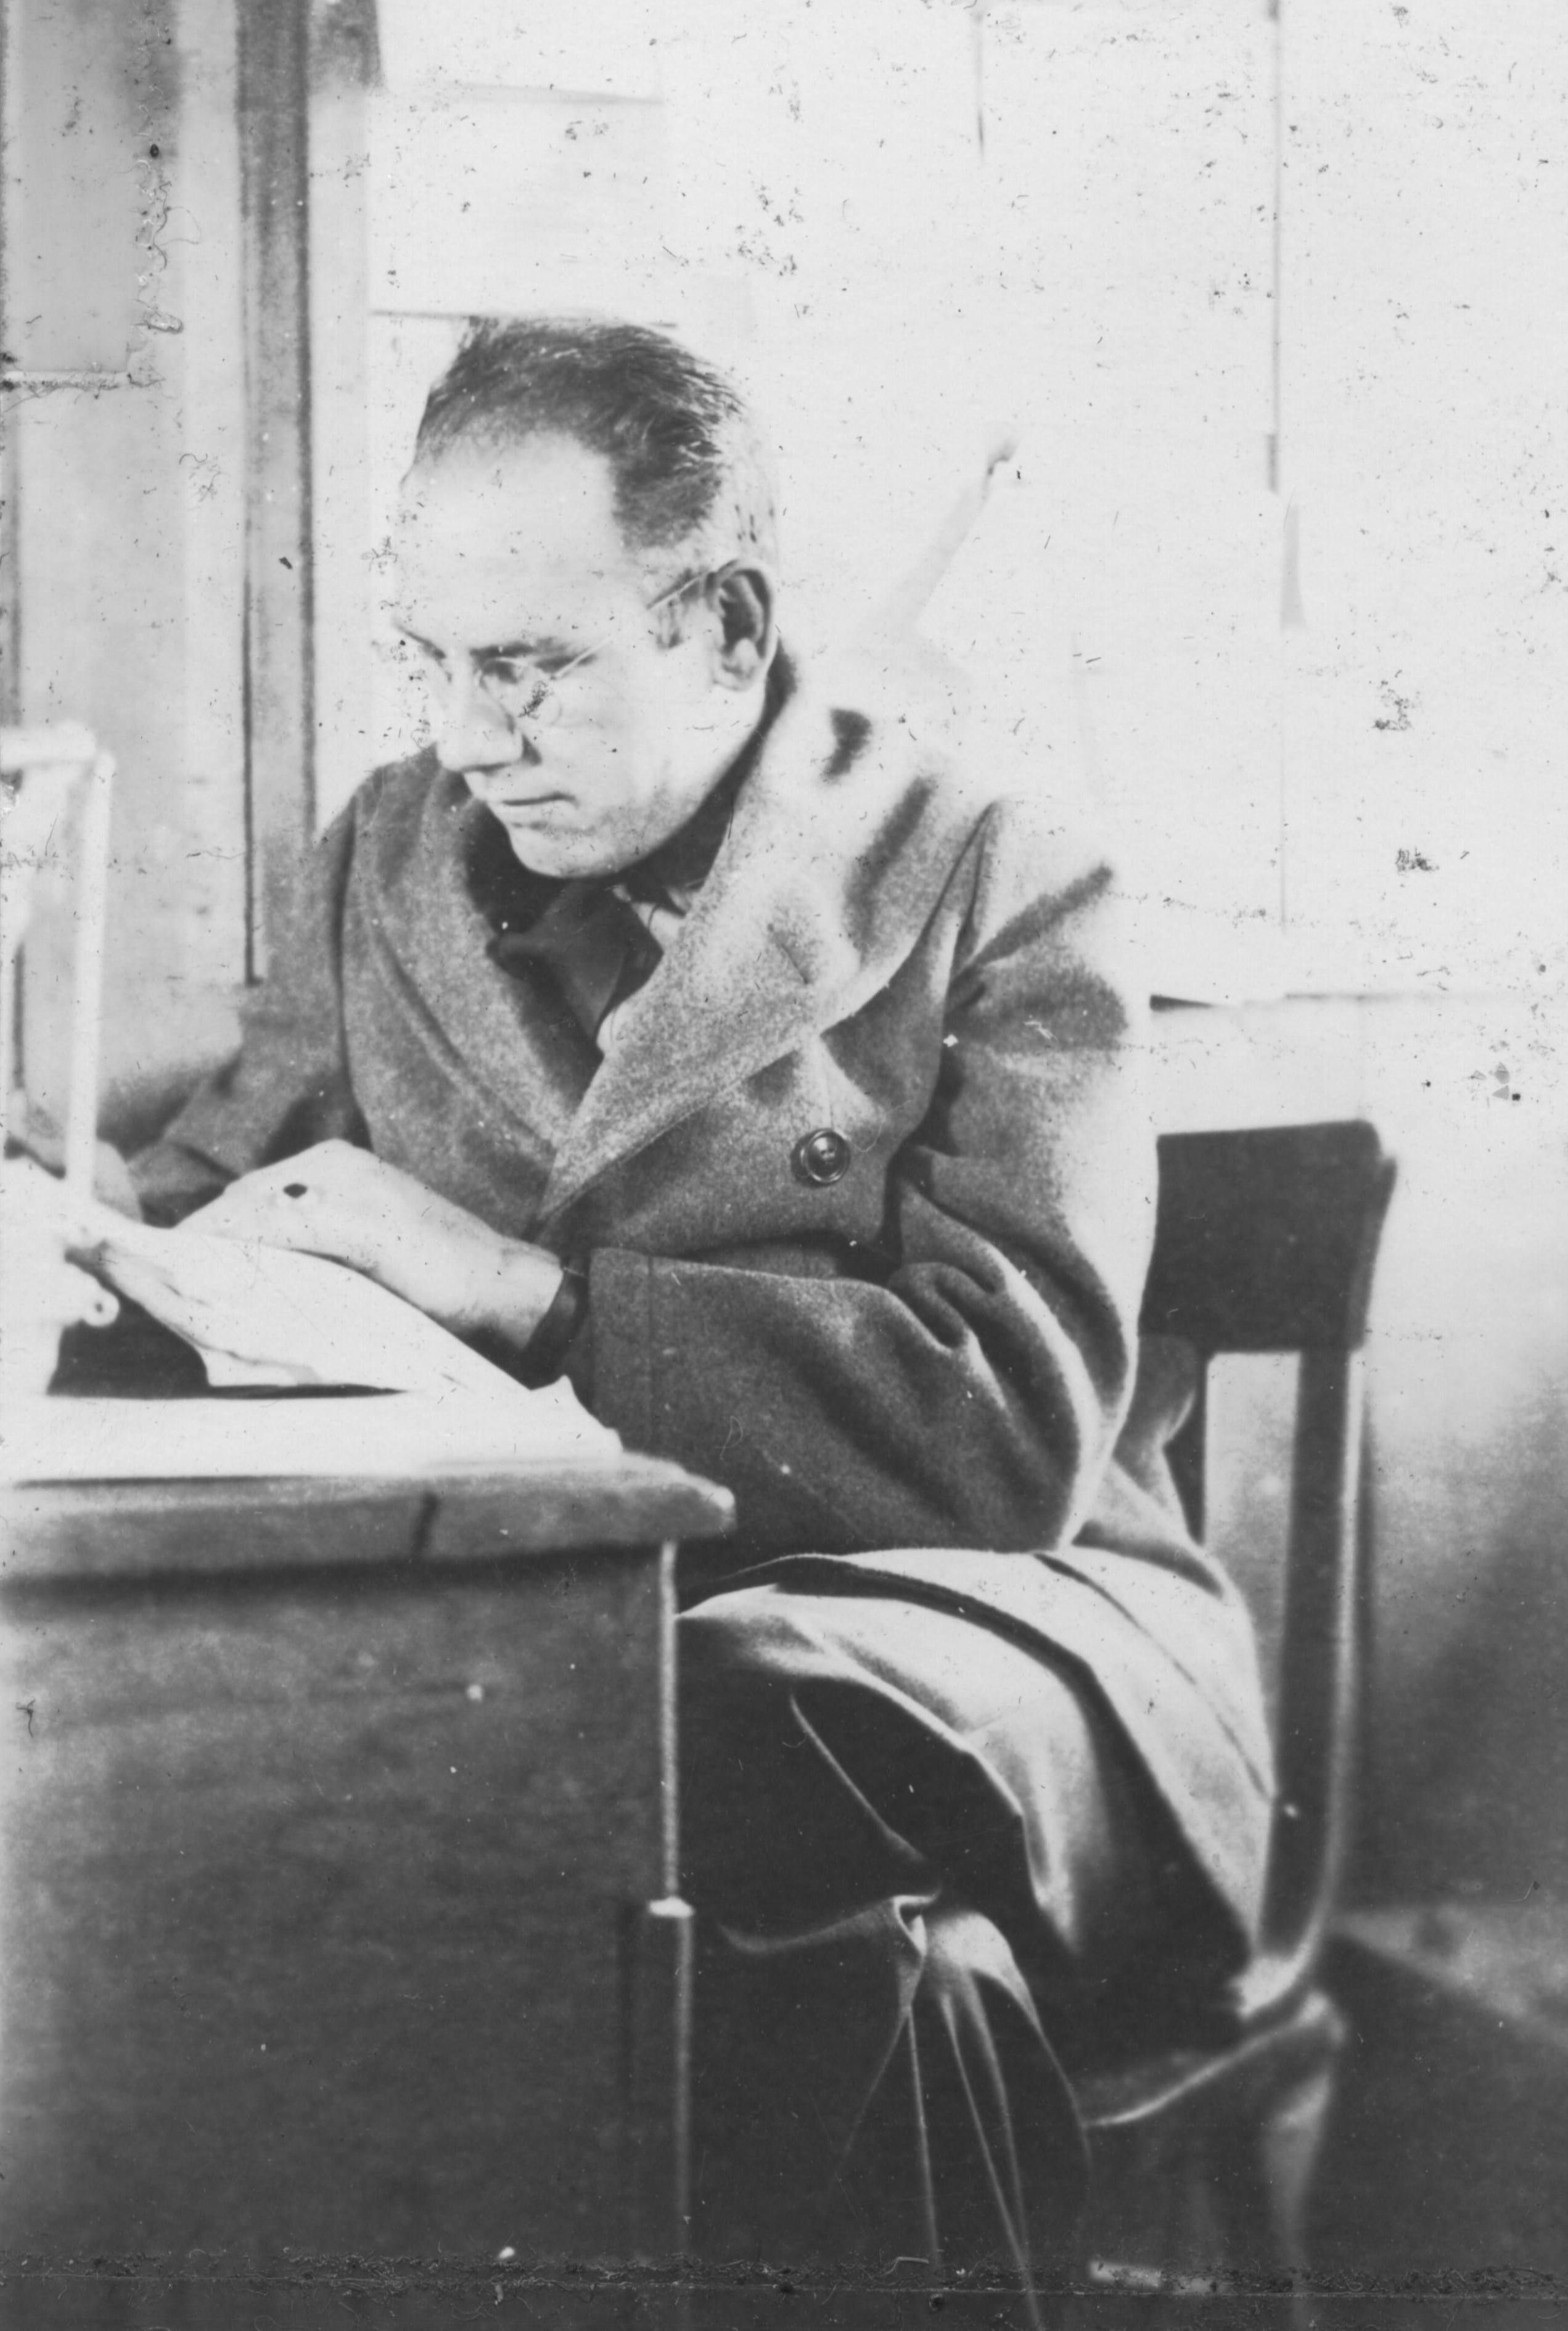 John S. Shipley working at a desk